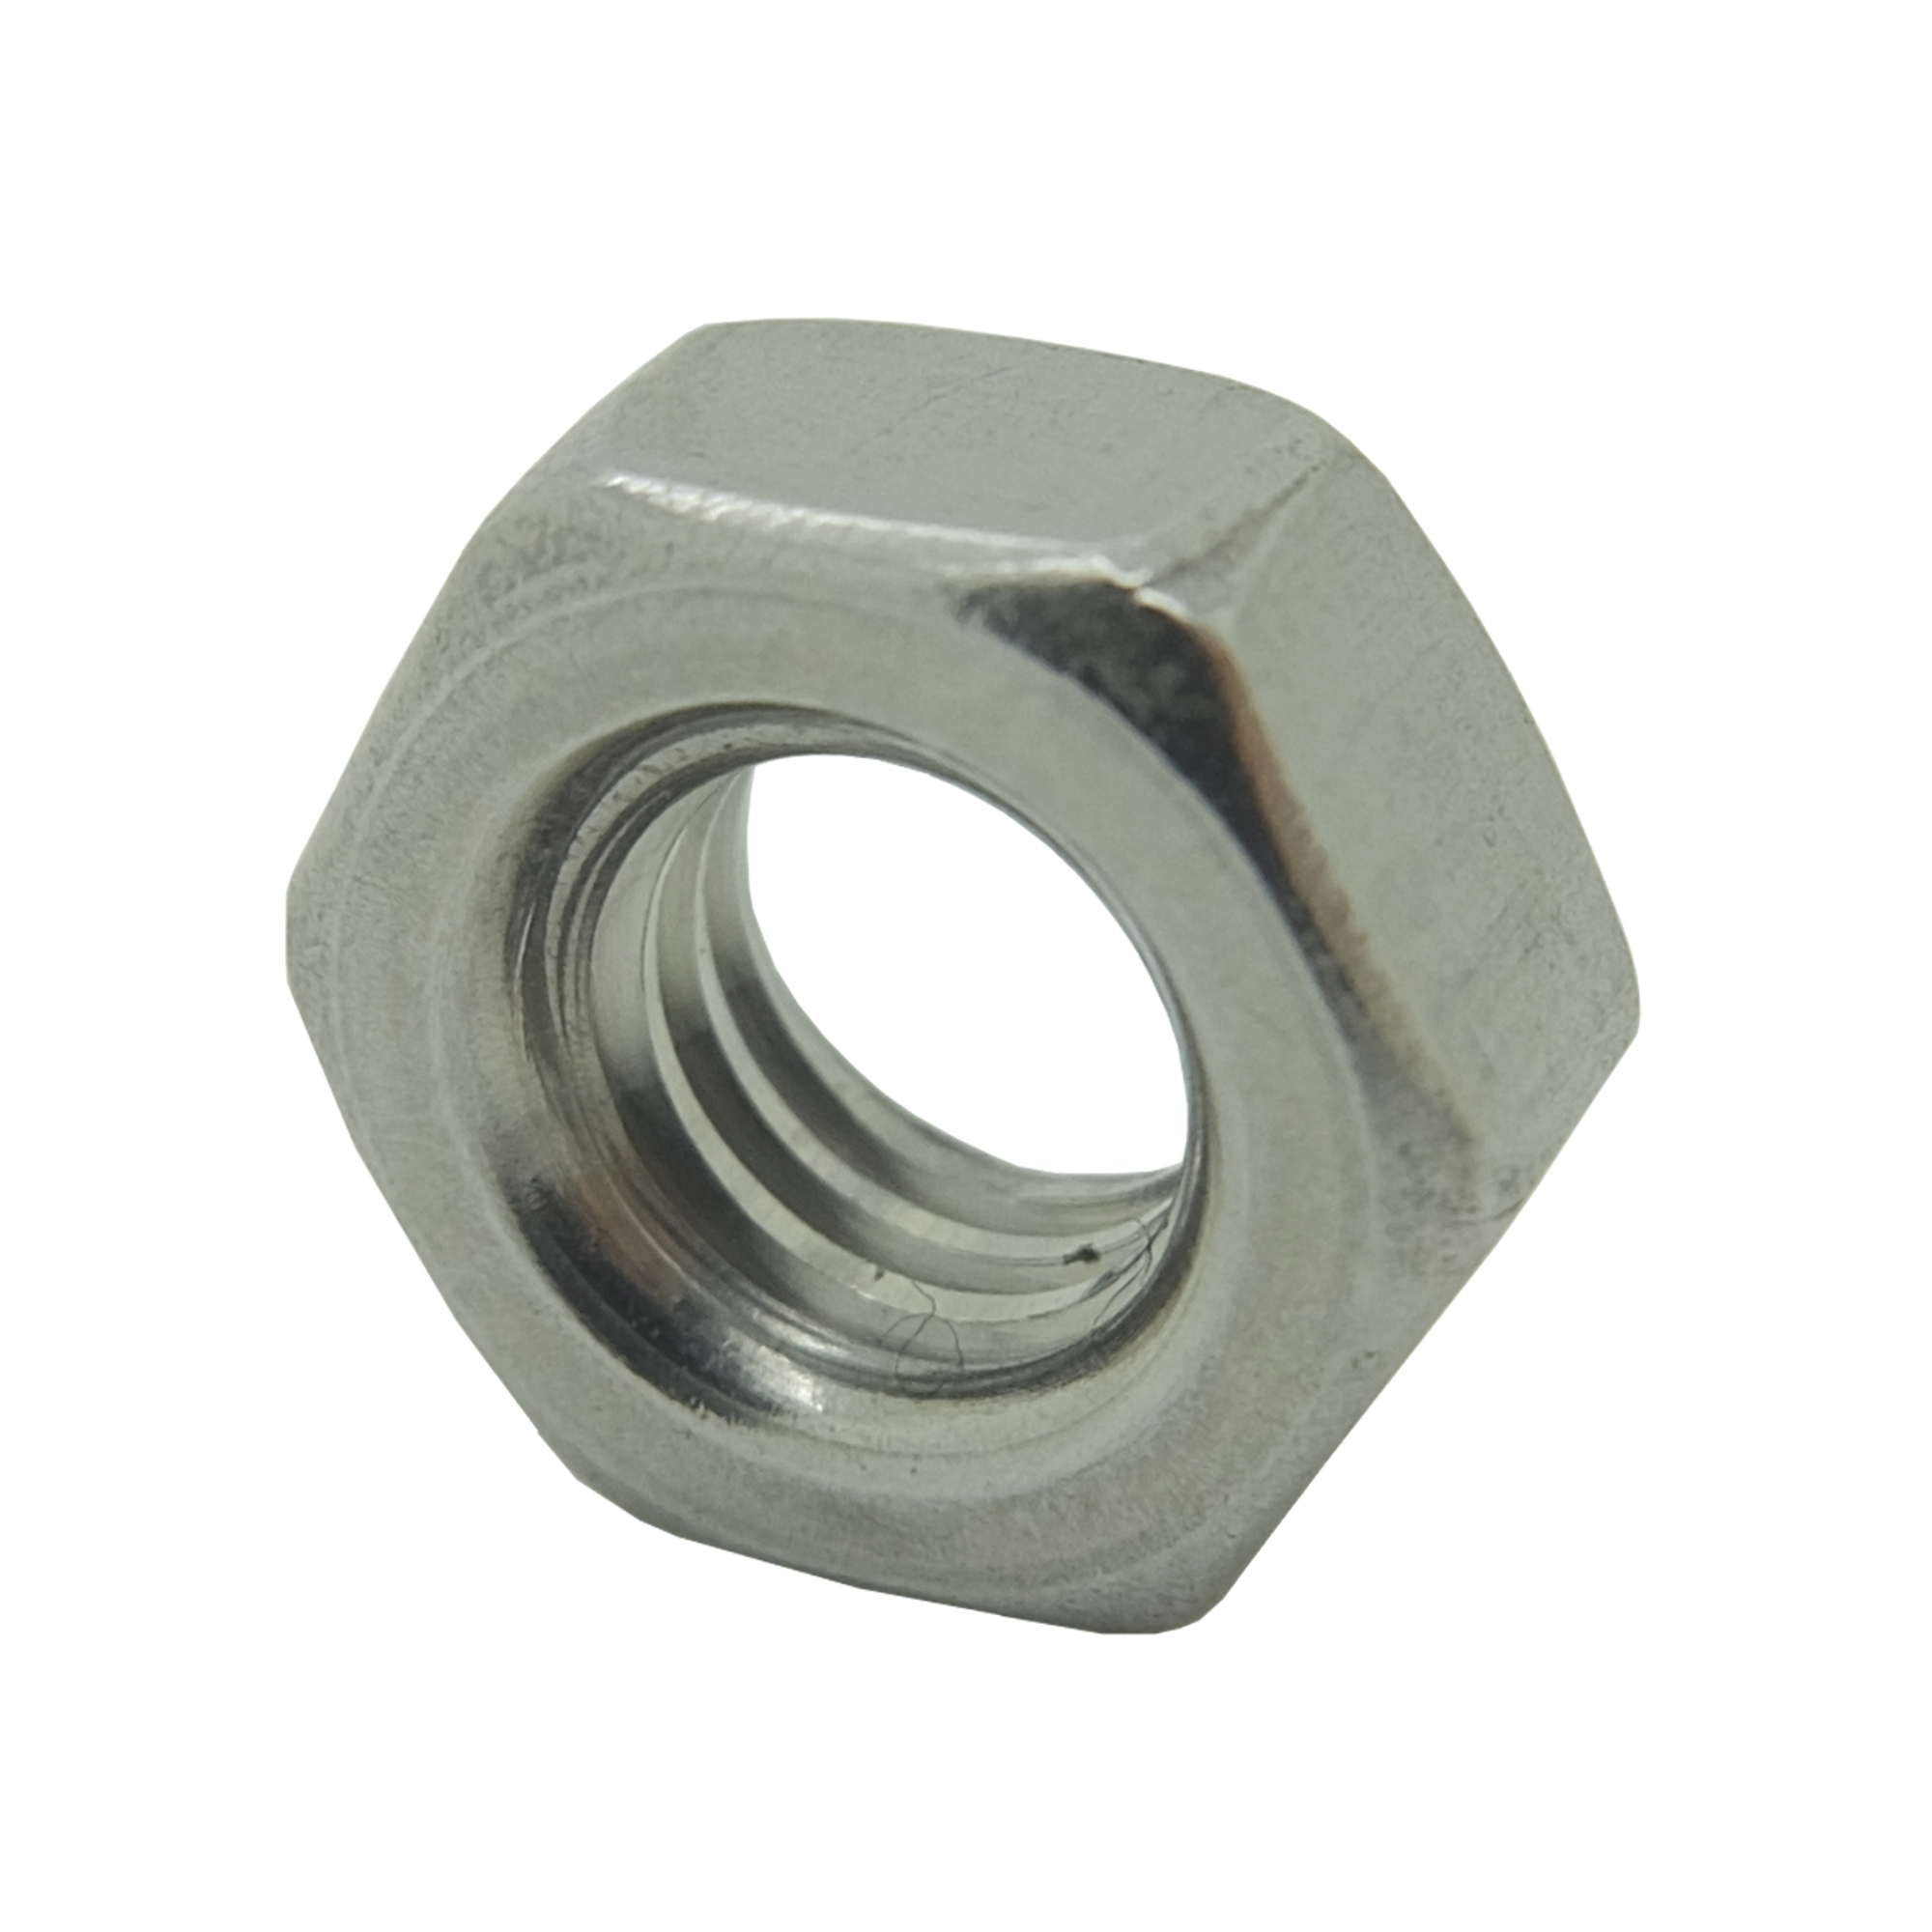 M8 RH A4-AISI 316 Stainless Steel DIN 934 Hexagon Nut